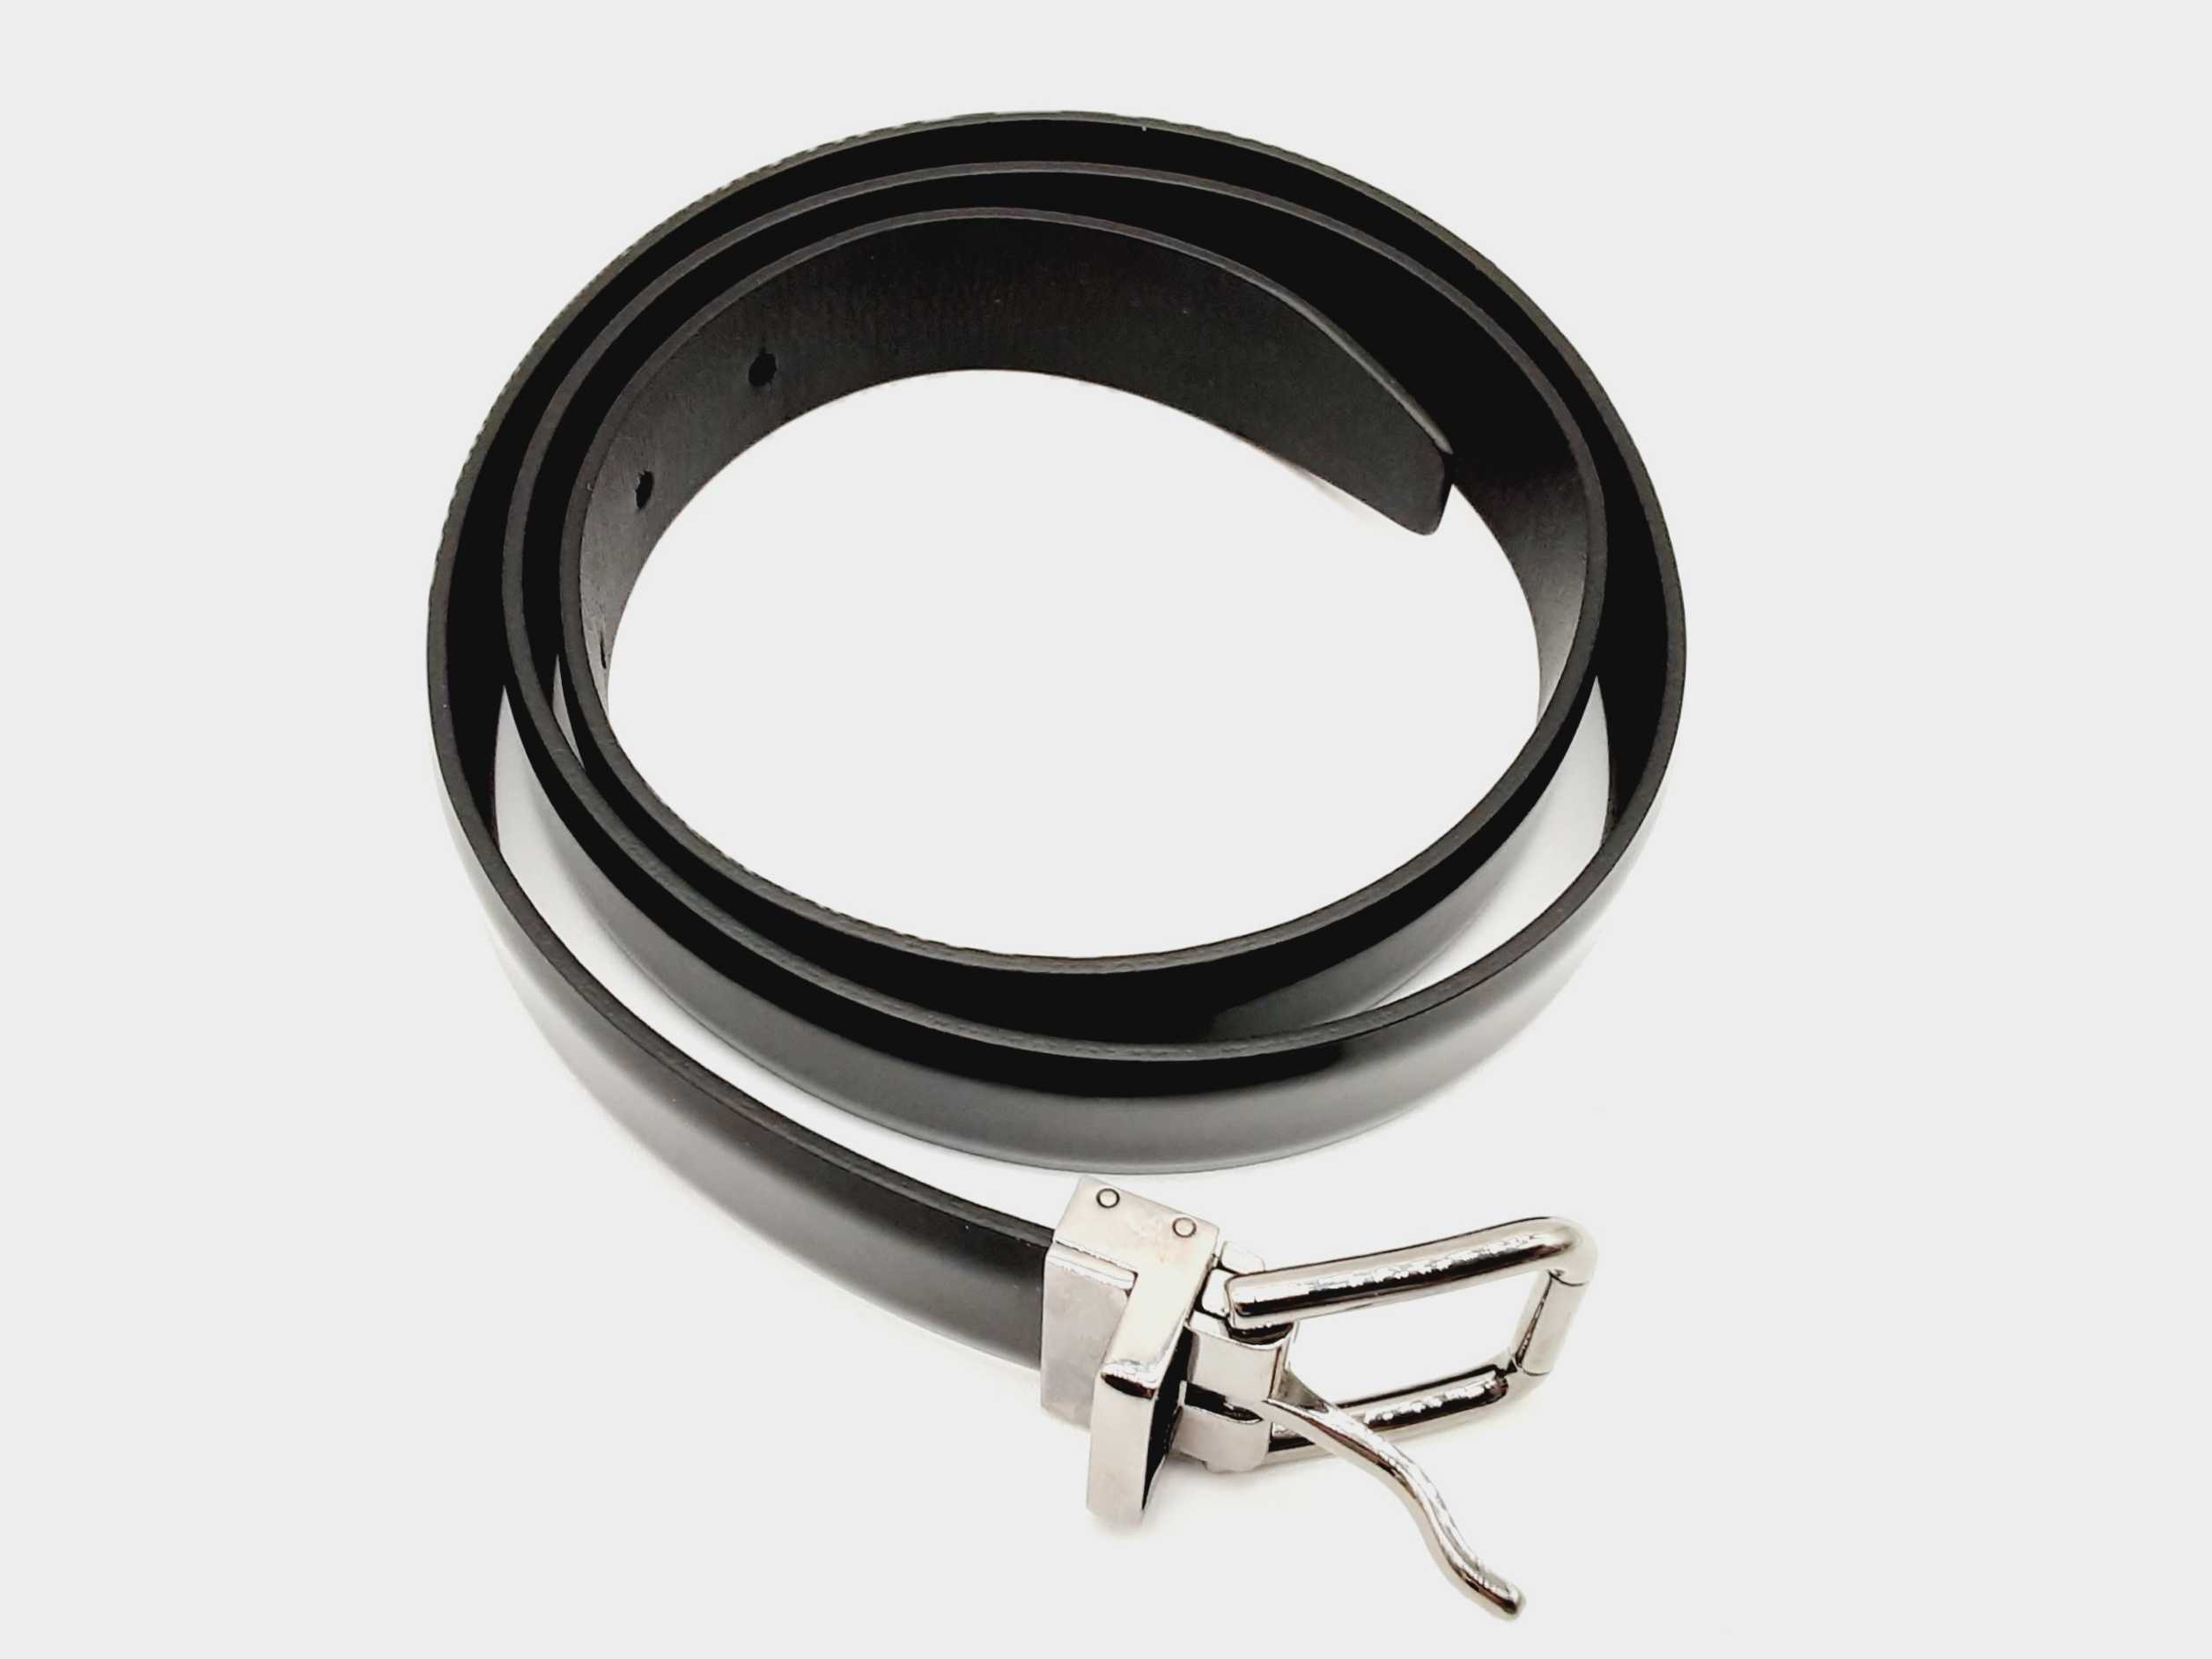 Dolce & Gabbana Black Smooth Leather Belt Size 110/44 Dooxzde 144010026116